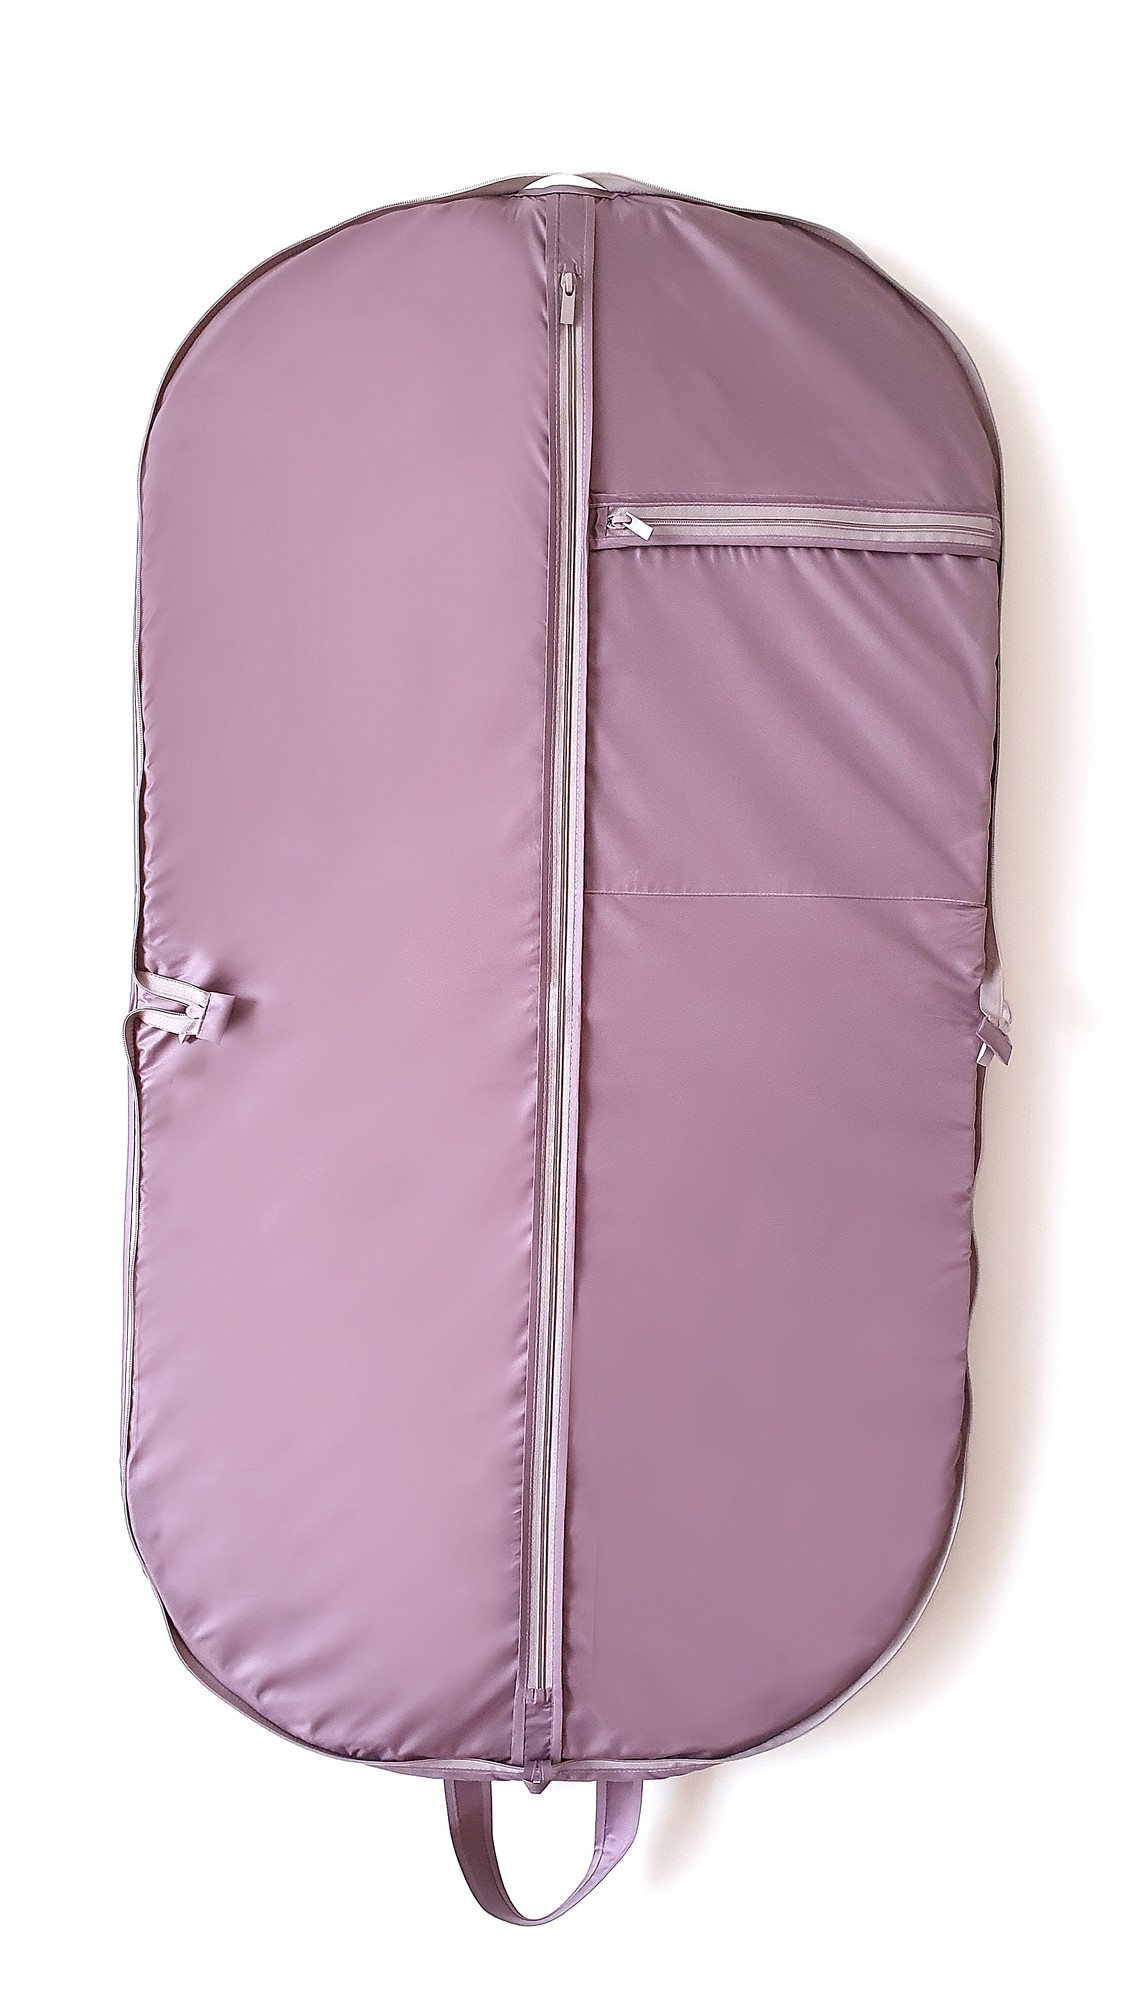 Hanging Garment Bag Lavander  Unisex Suit Bag Travel Bag Business suit